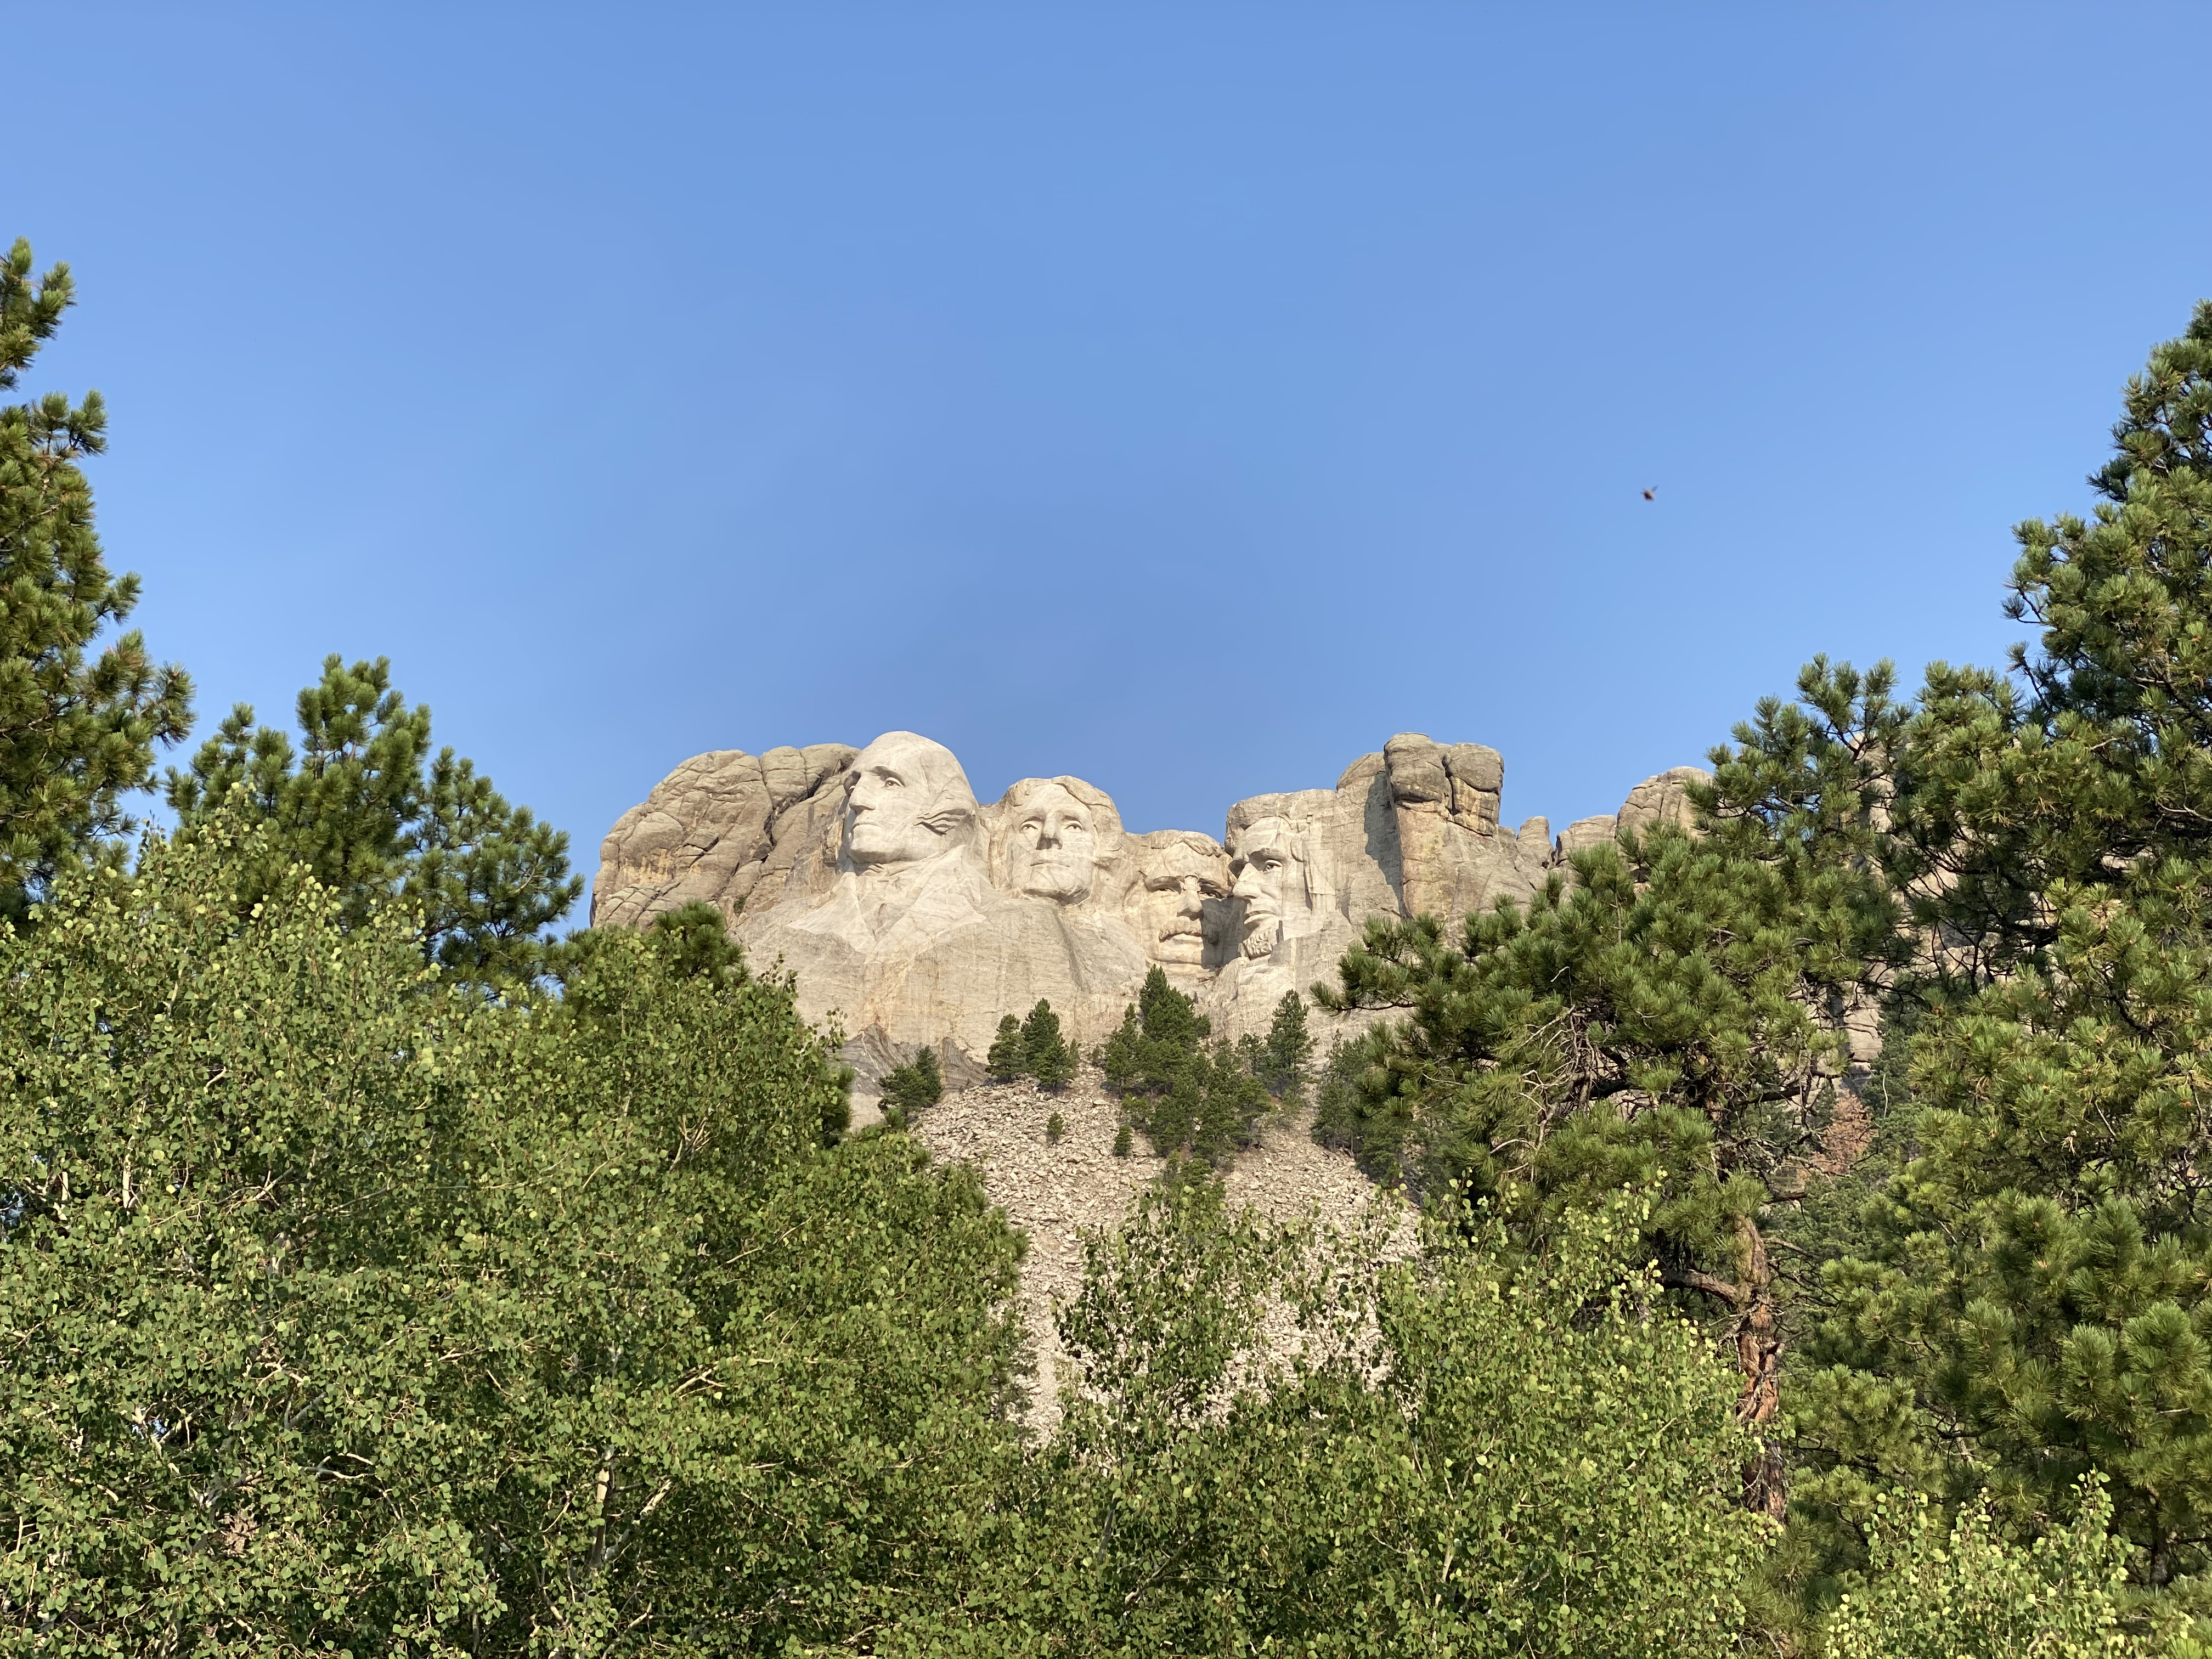 Mount Rushmore, South Dakota. Credit: Carolina Valenzuela